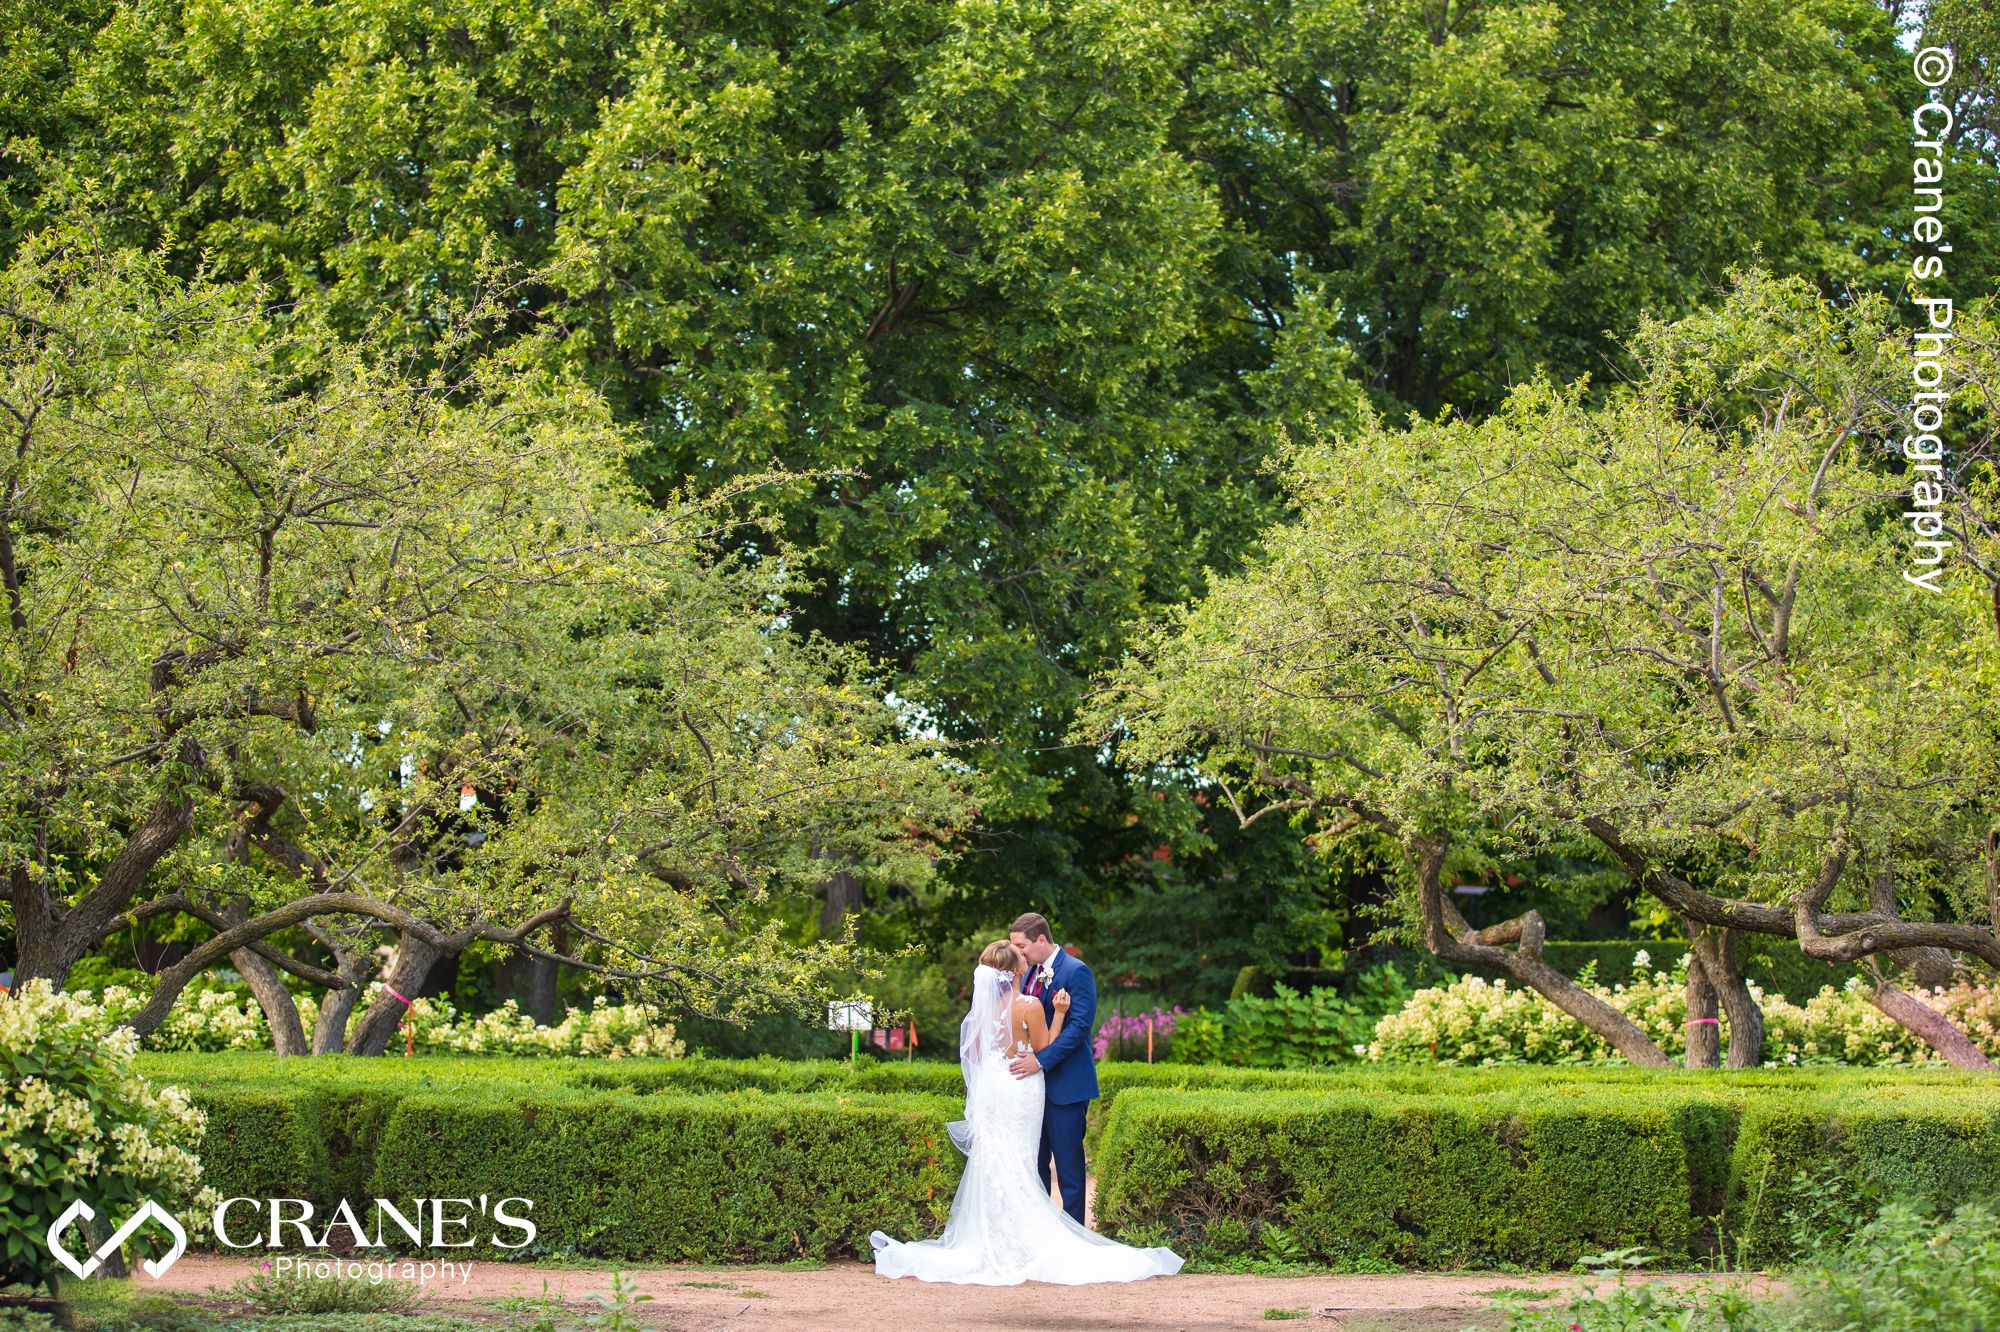 Wedding photography at the Morton Arboretum